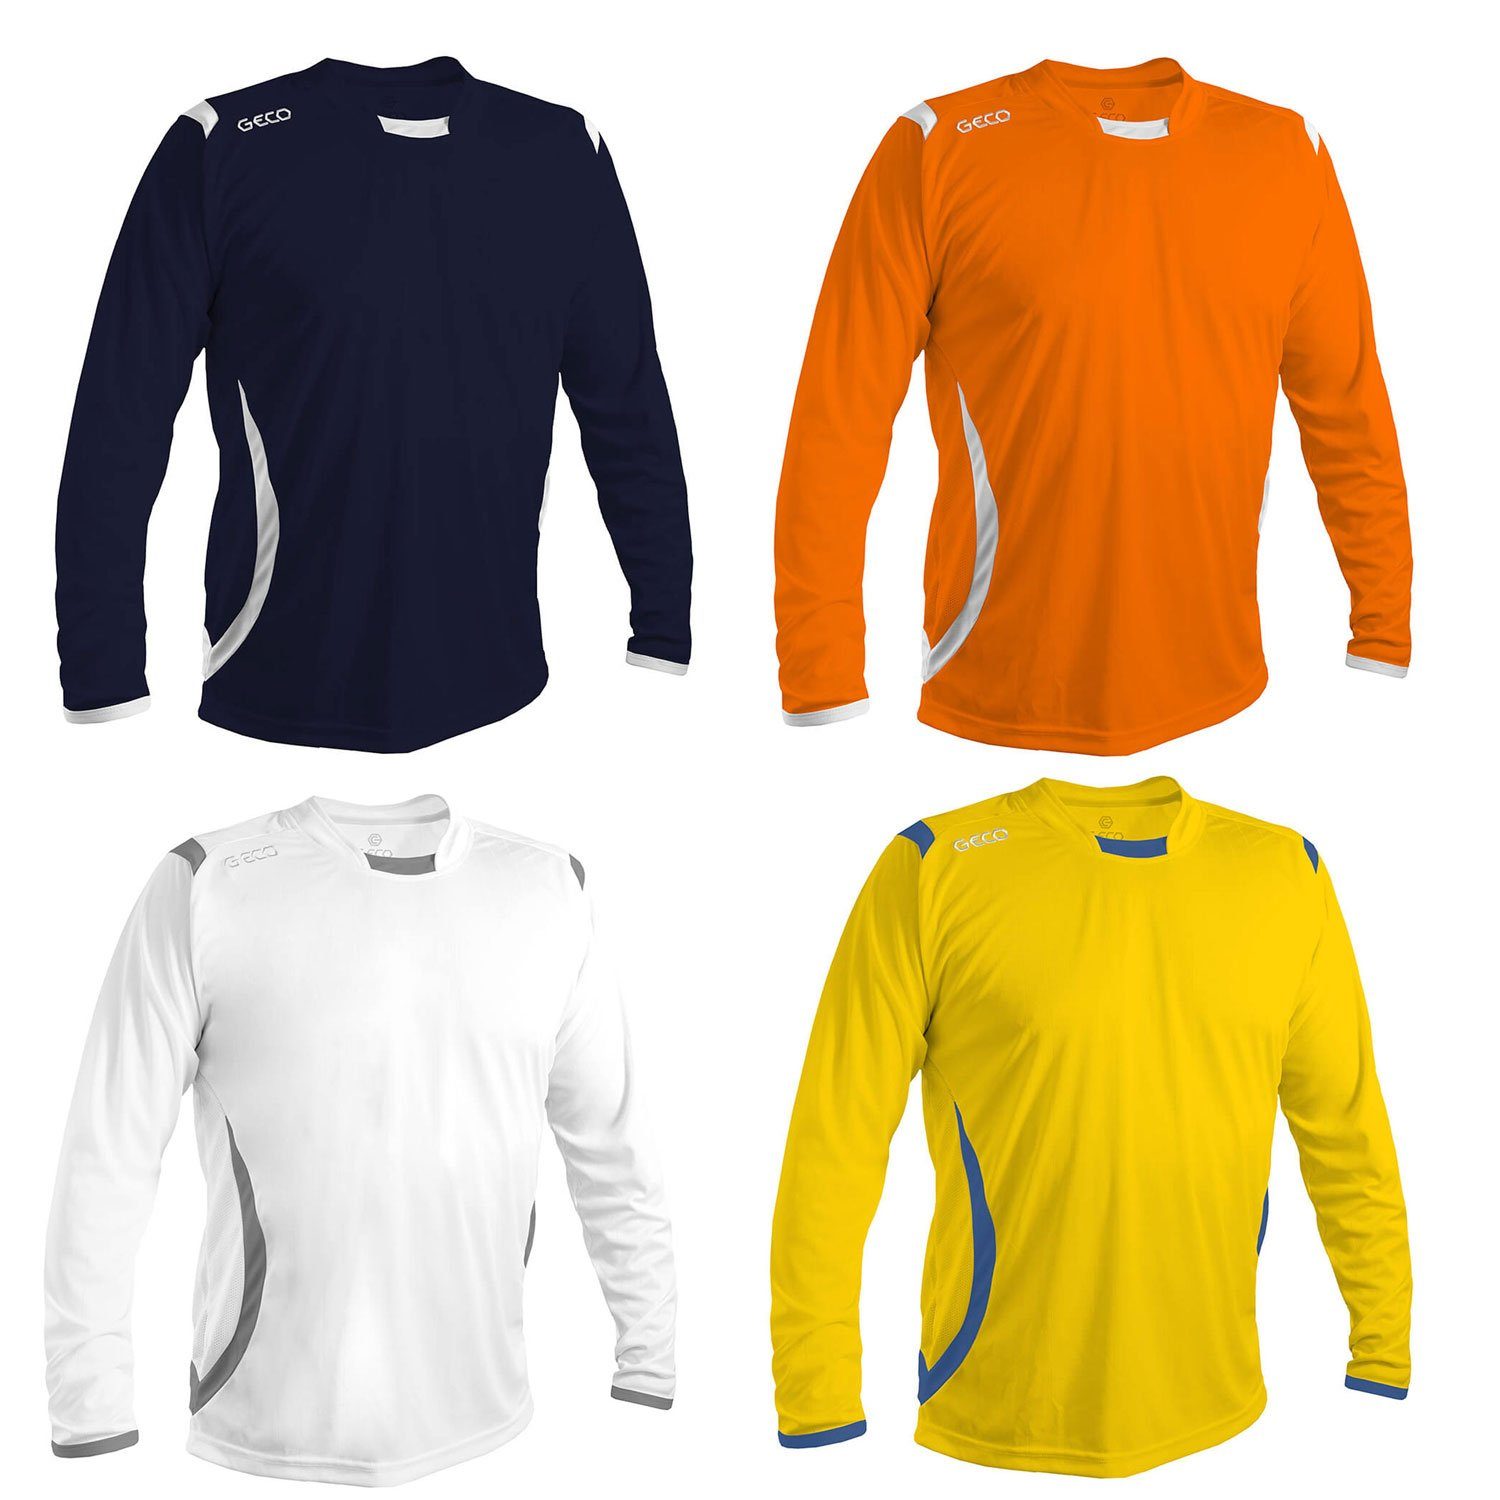 zweifarbig Levante langarm Geco Geco dunkelblau/weiß Fußballtrikot Sportswear Trikot Fußball